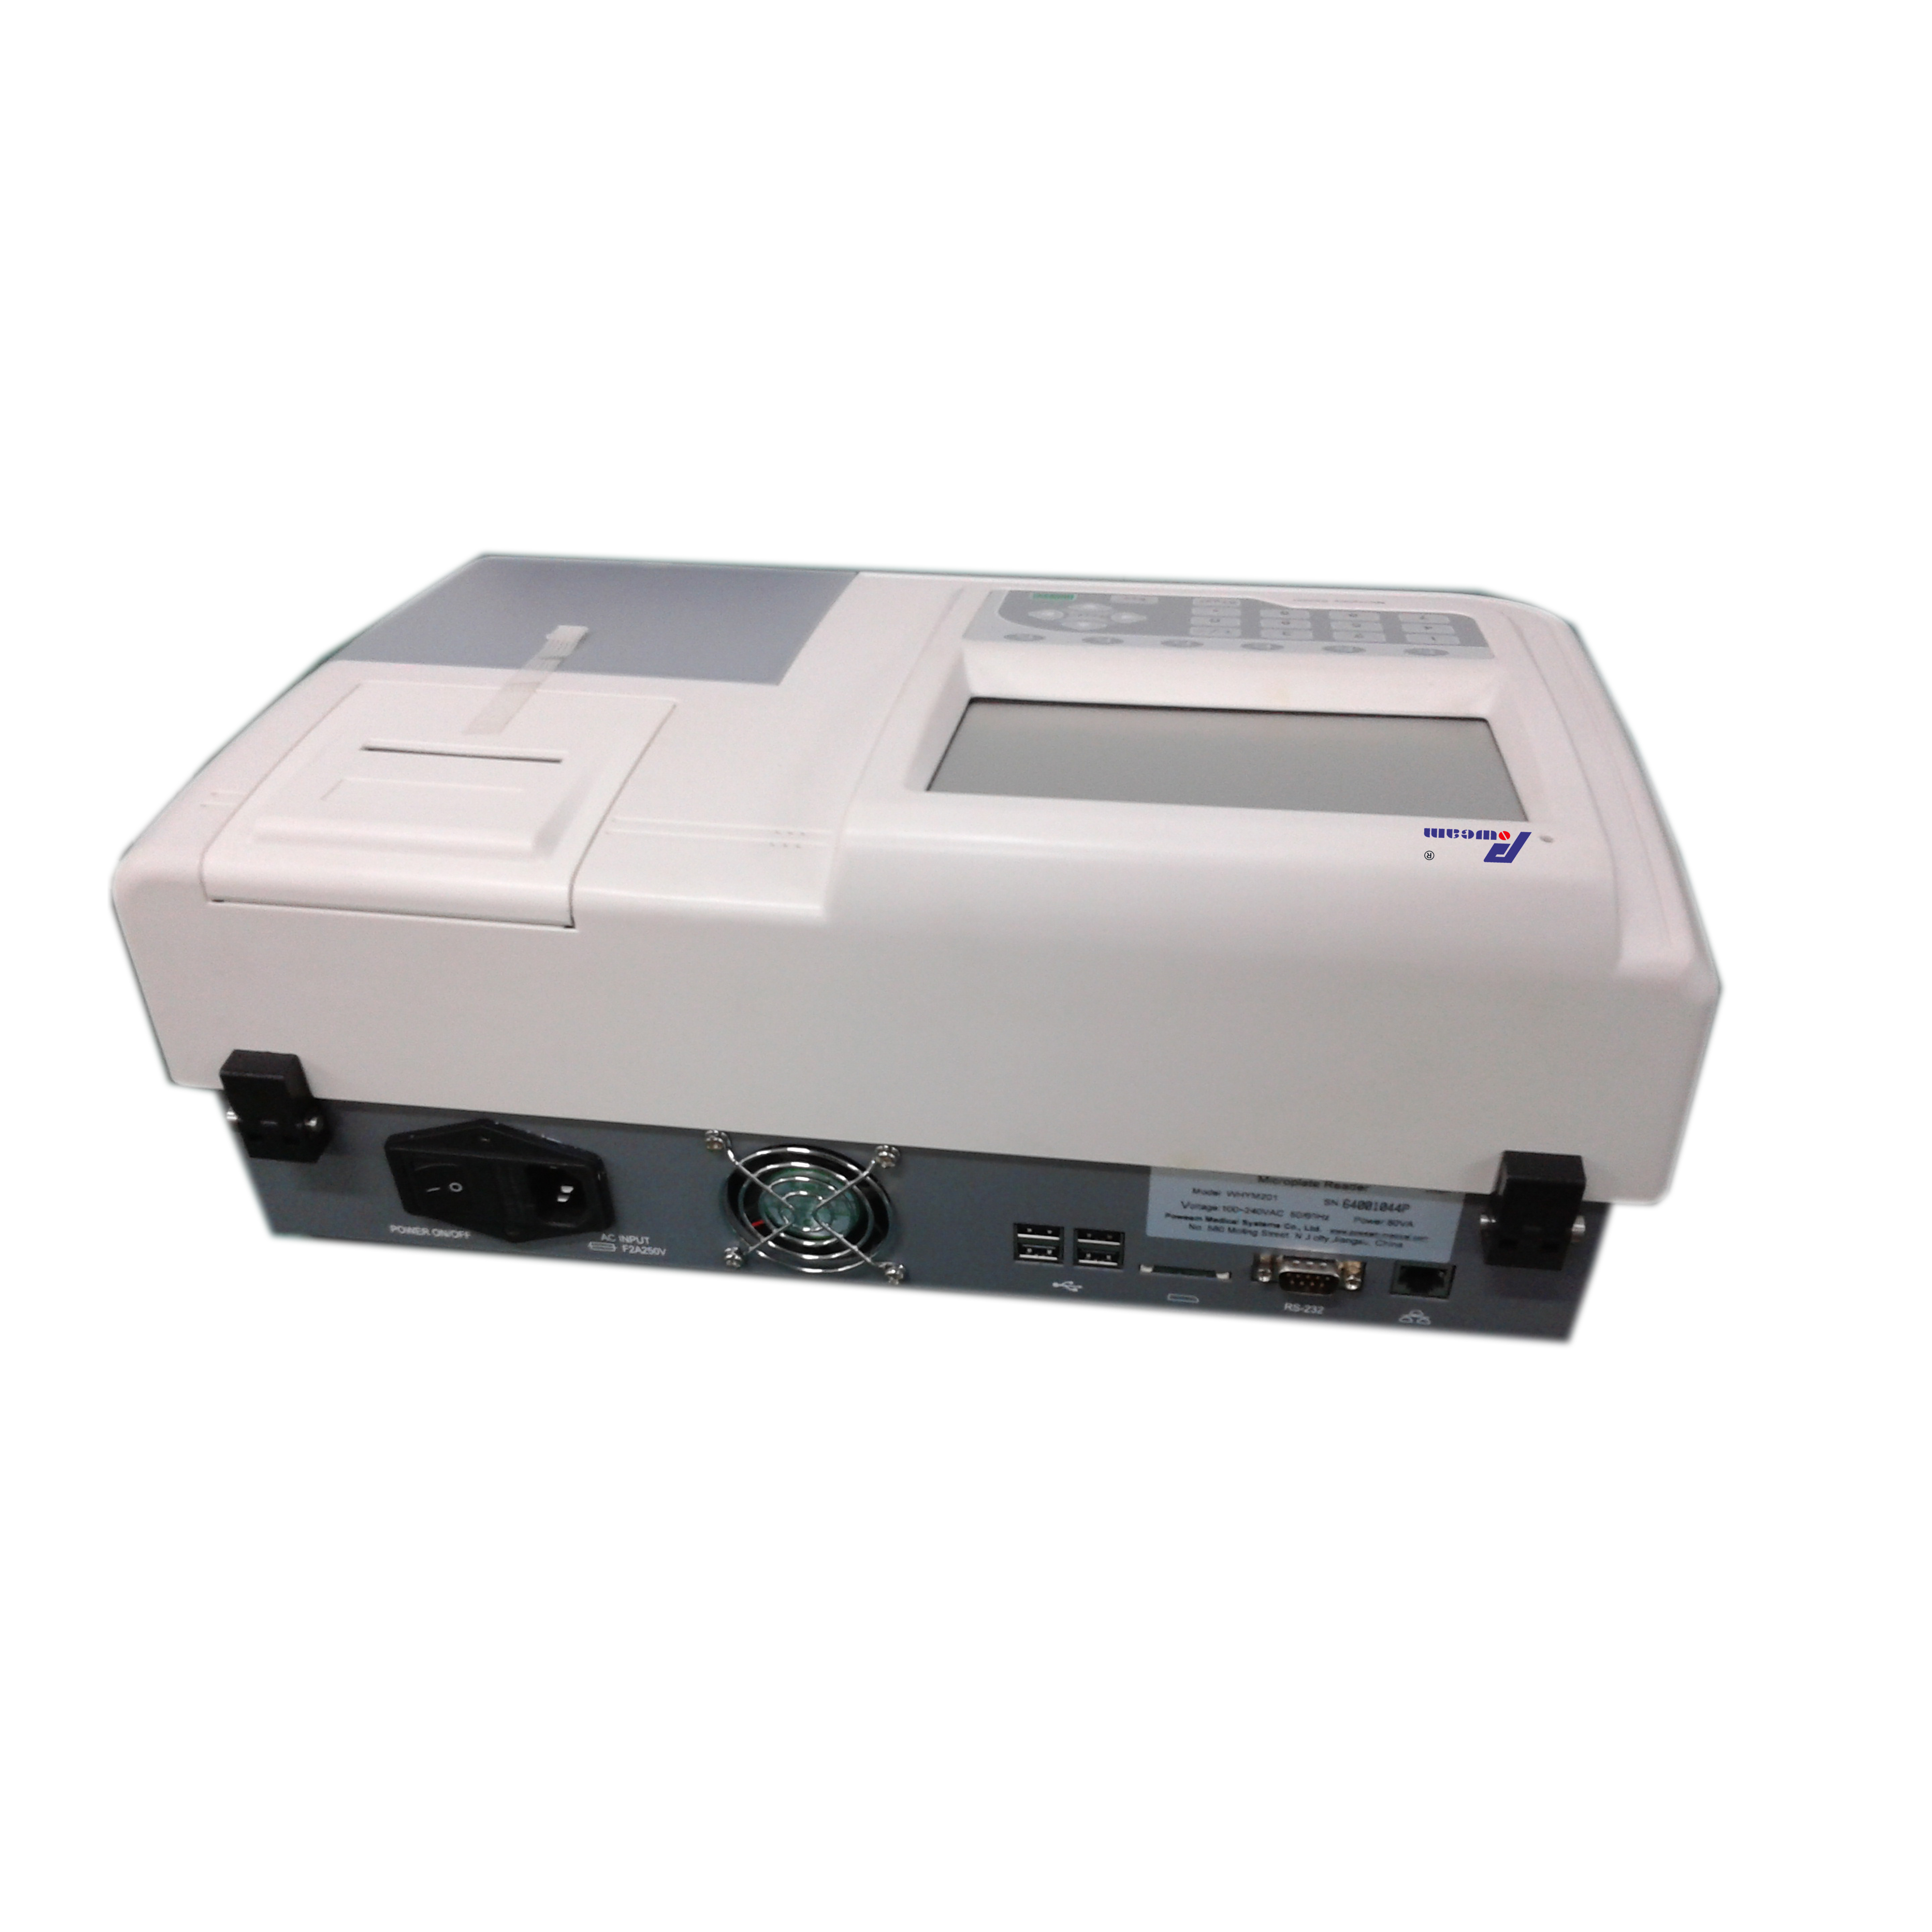 CE-genehmigte Laborgeräte ELISA Microplat Reader (Whym201)